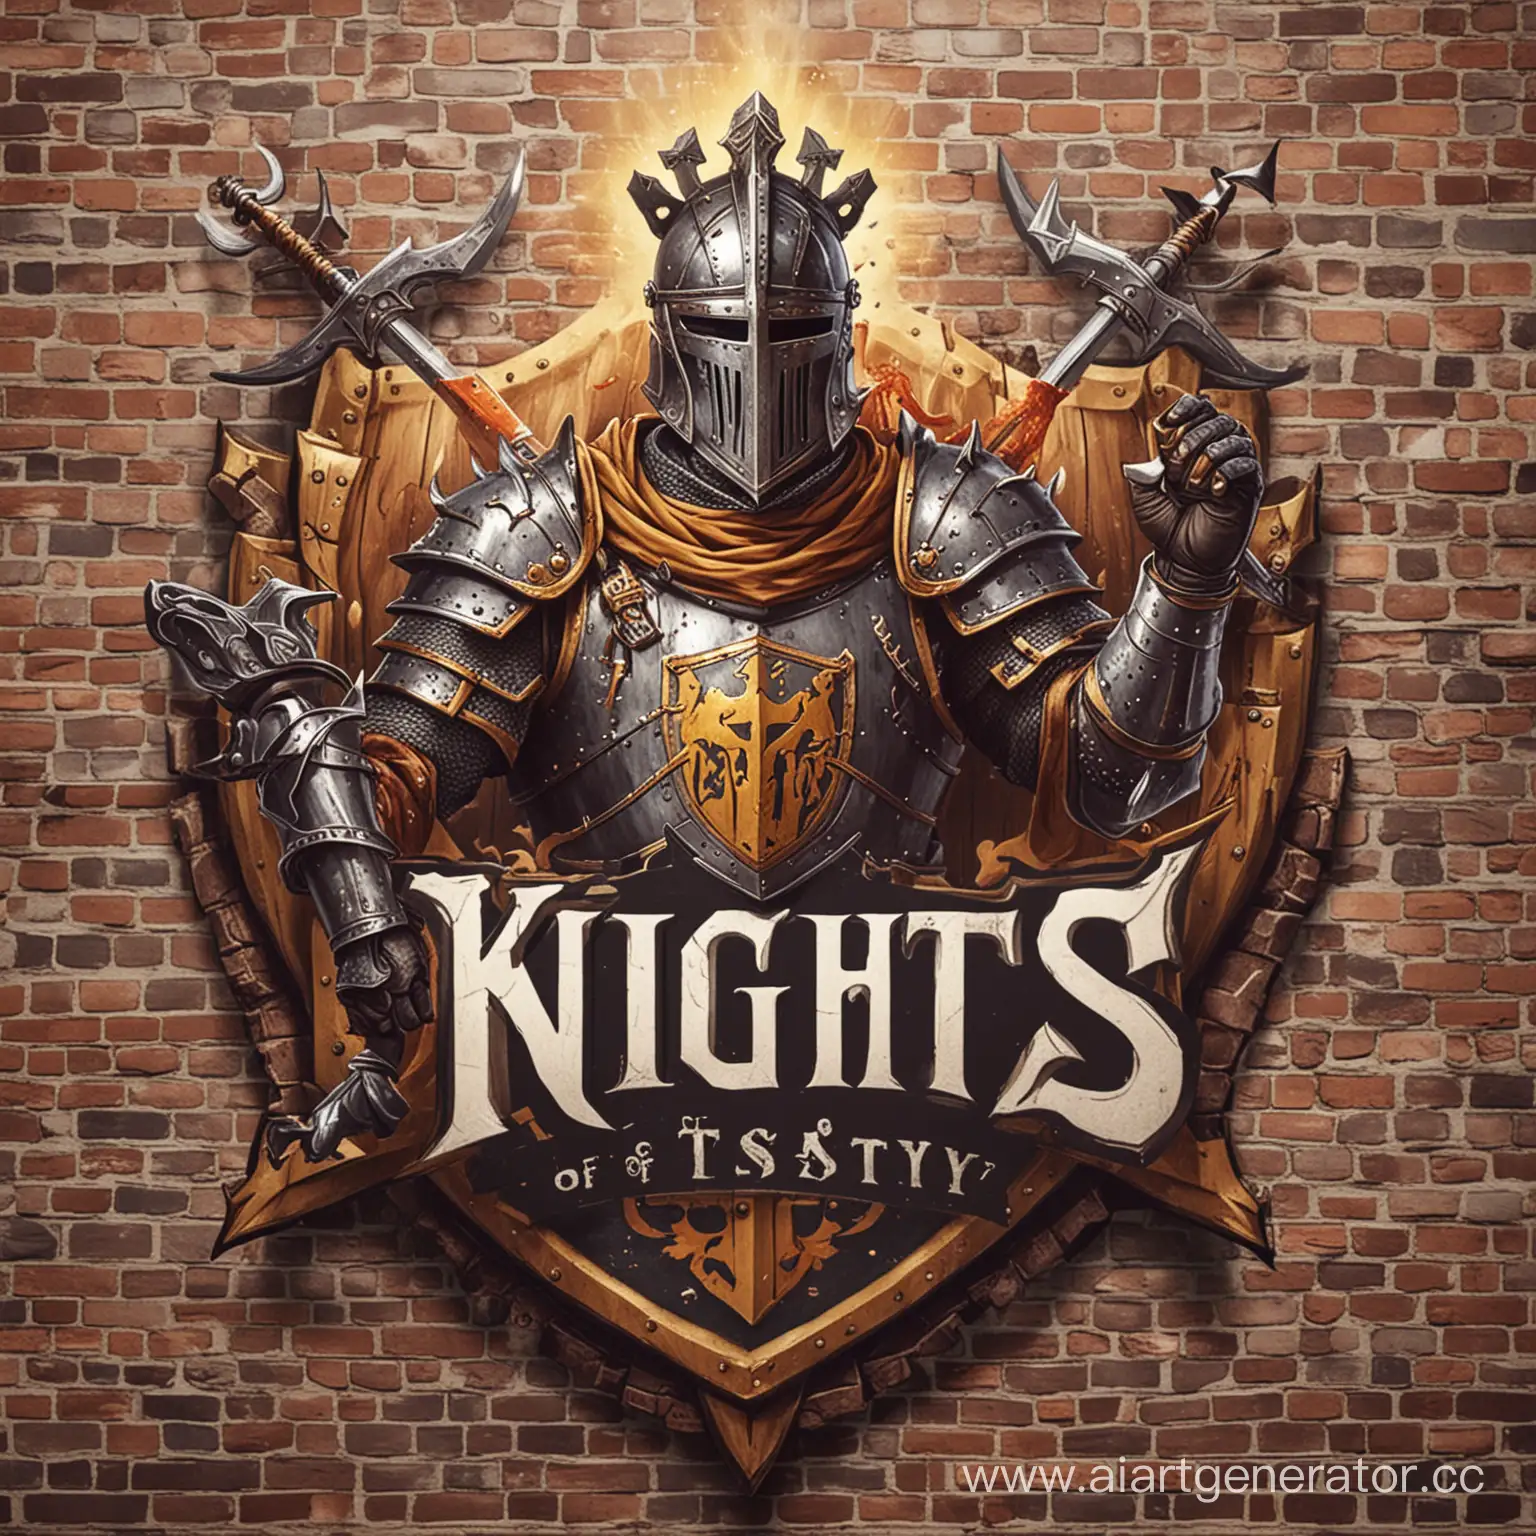 Medieval-Knights-Feast-at-Tasty-Burger-Kingdom